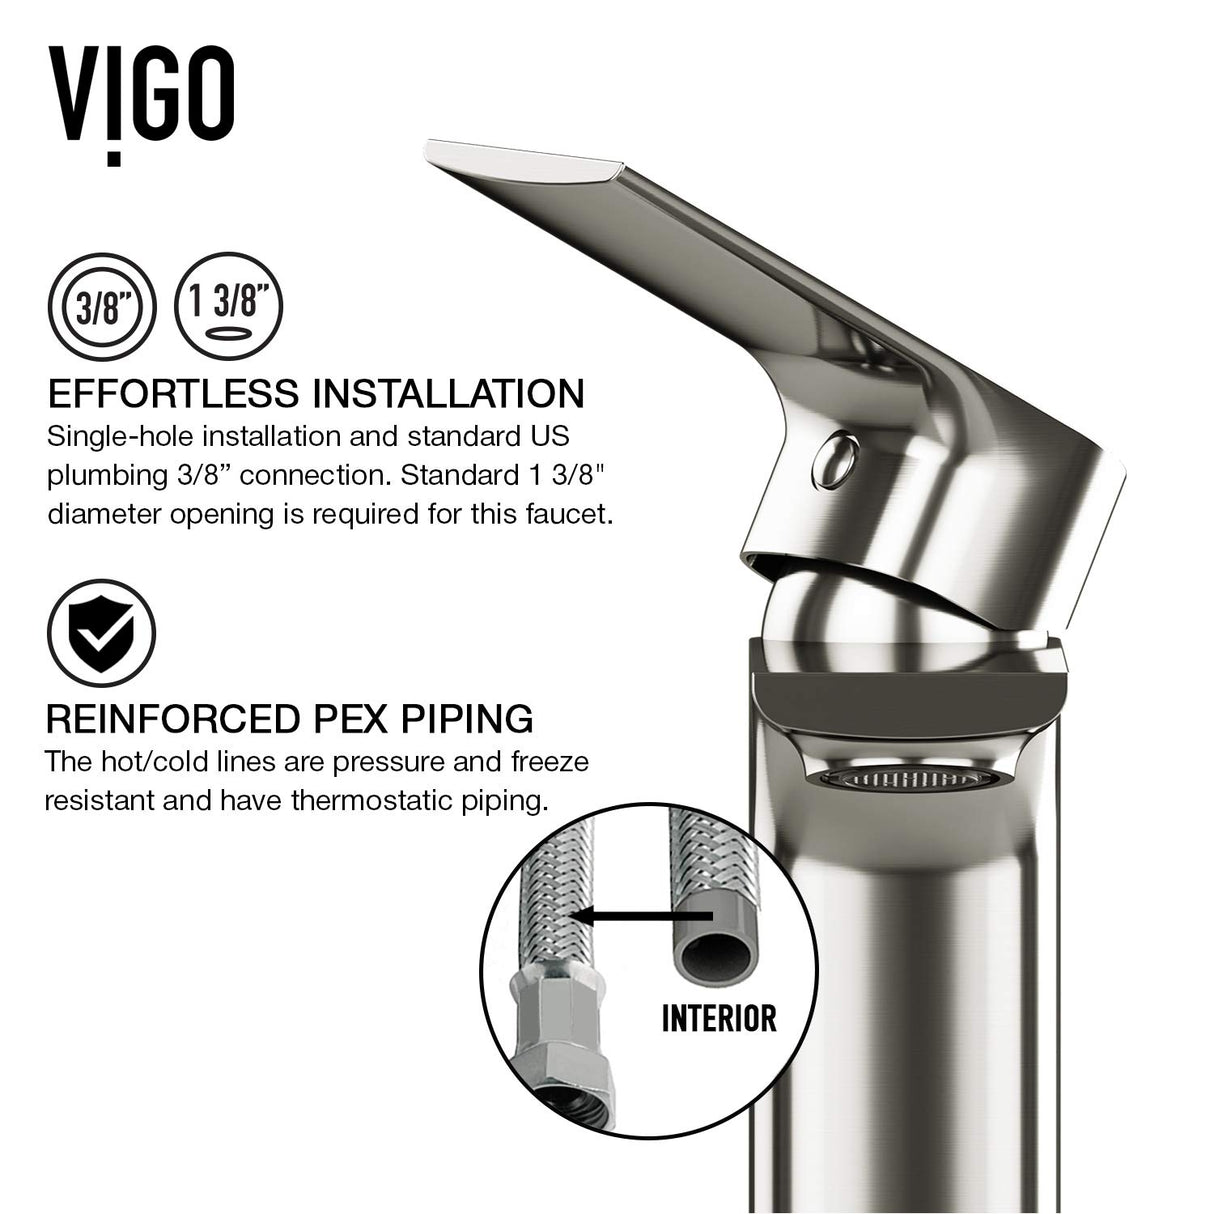 VIGO Davidson 6.375 inch H Single Hole Single Handle Single Hole Bathroom Faucet in Brushed Nickel - Bathroom Sink Faucet VG01043BN